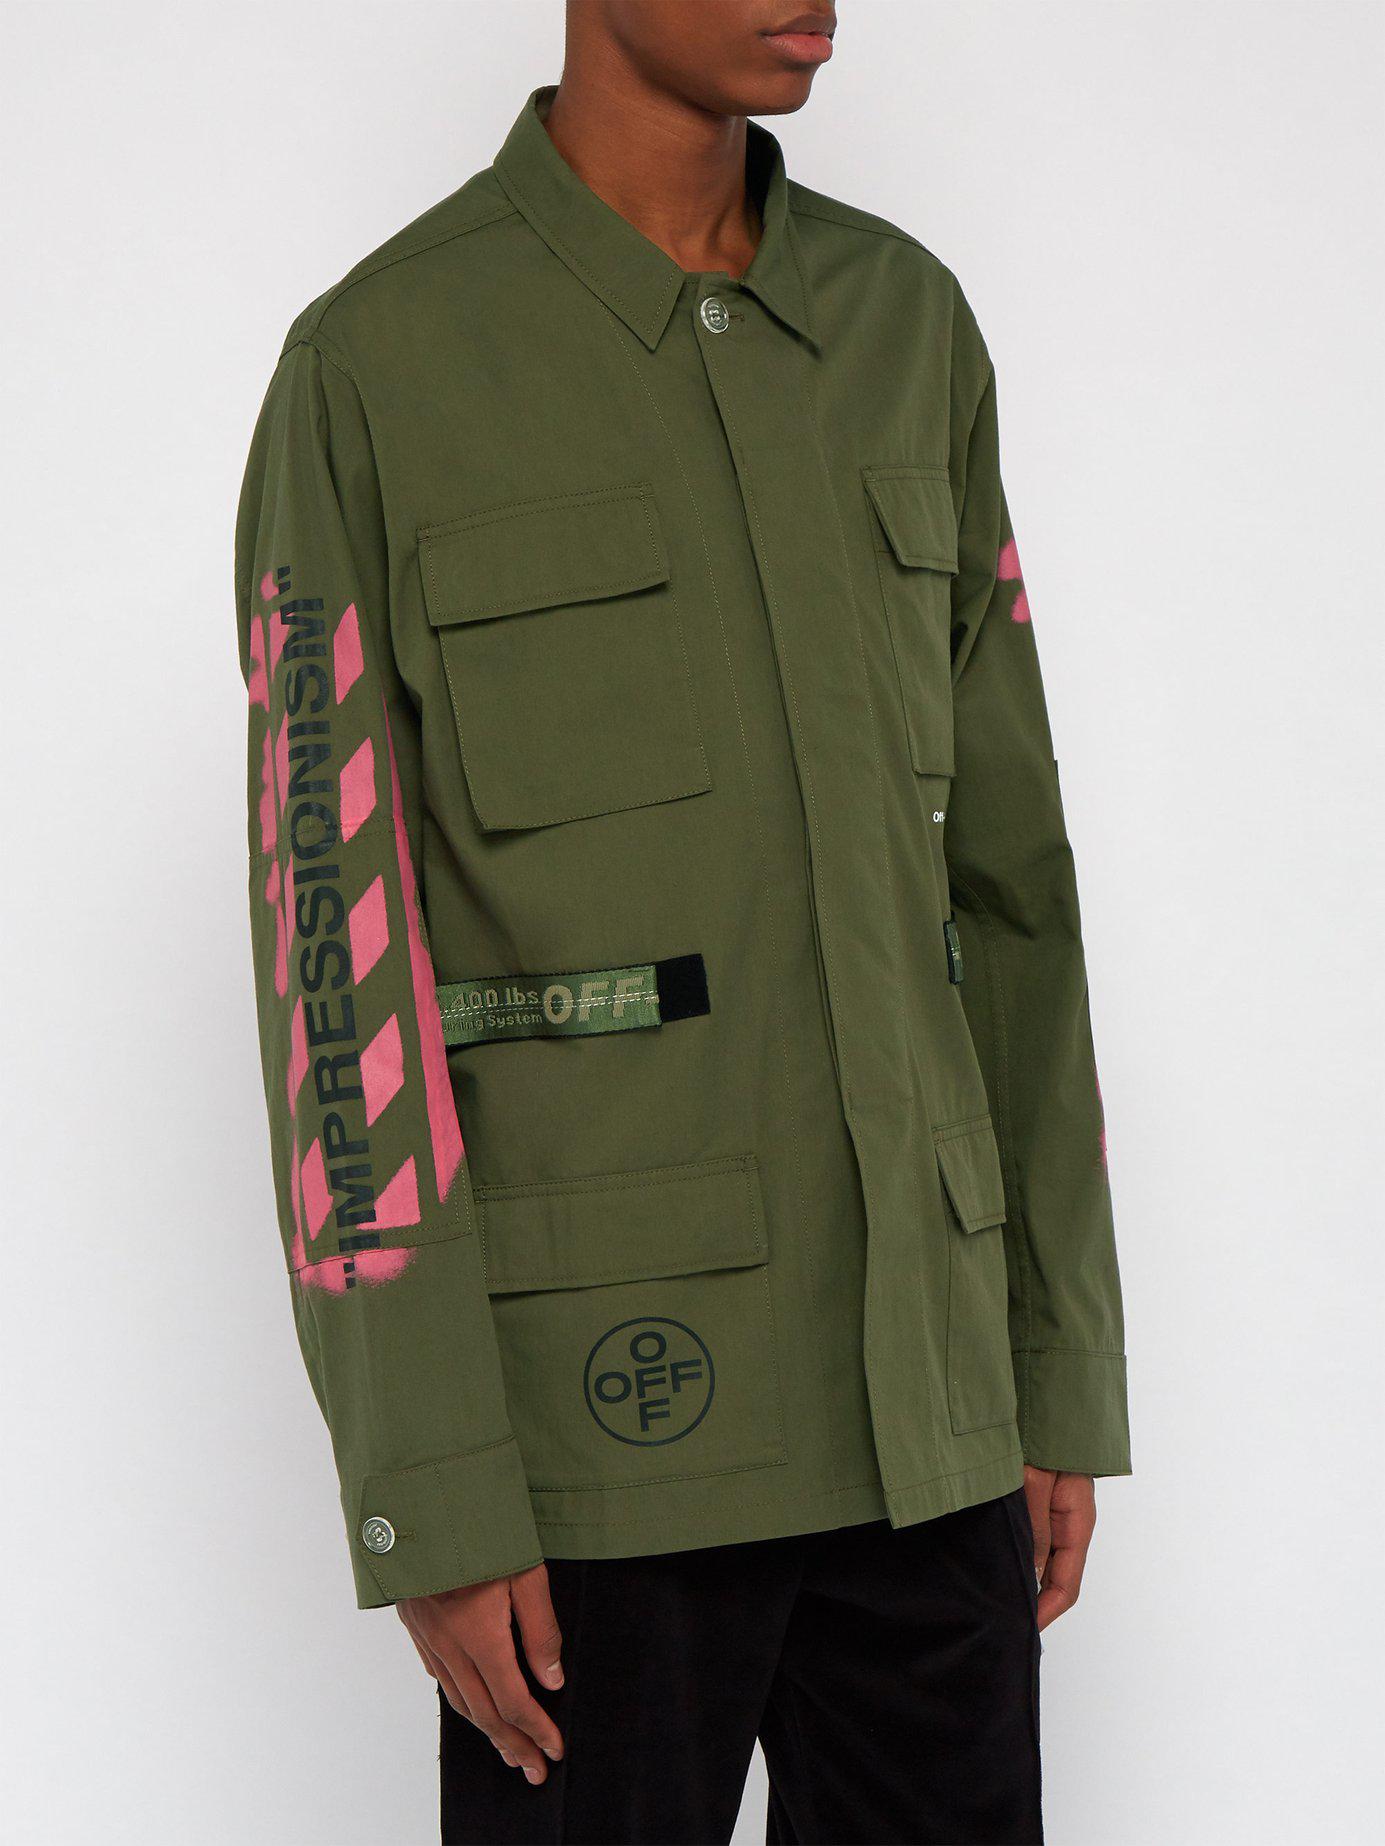 Off-White c/o Virgil Abloh Diagonal Arrow Print Military Field Jacket in  Green for Men - Lyst